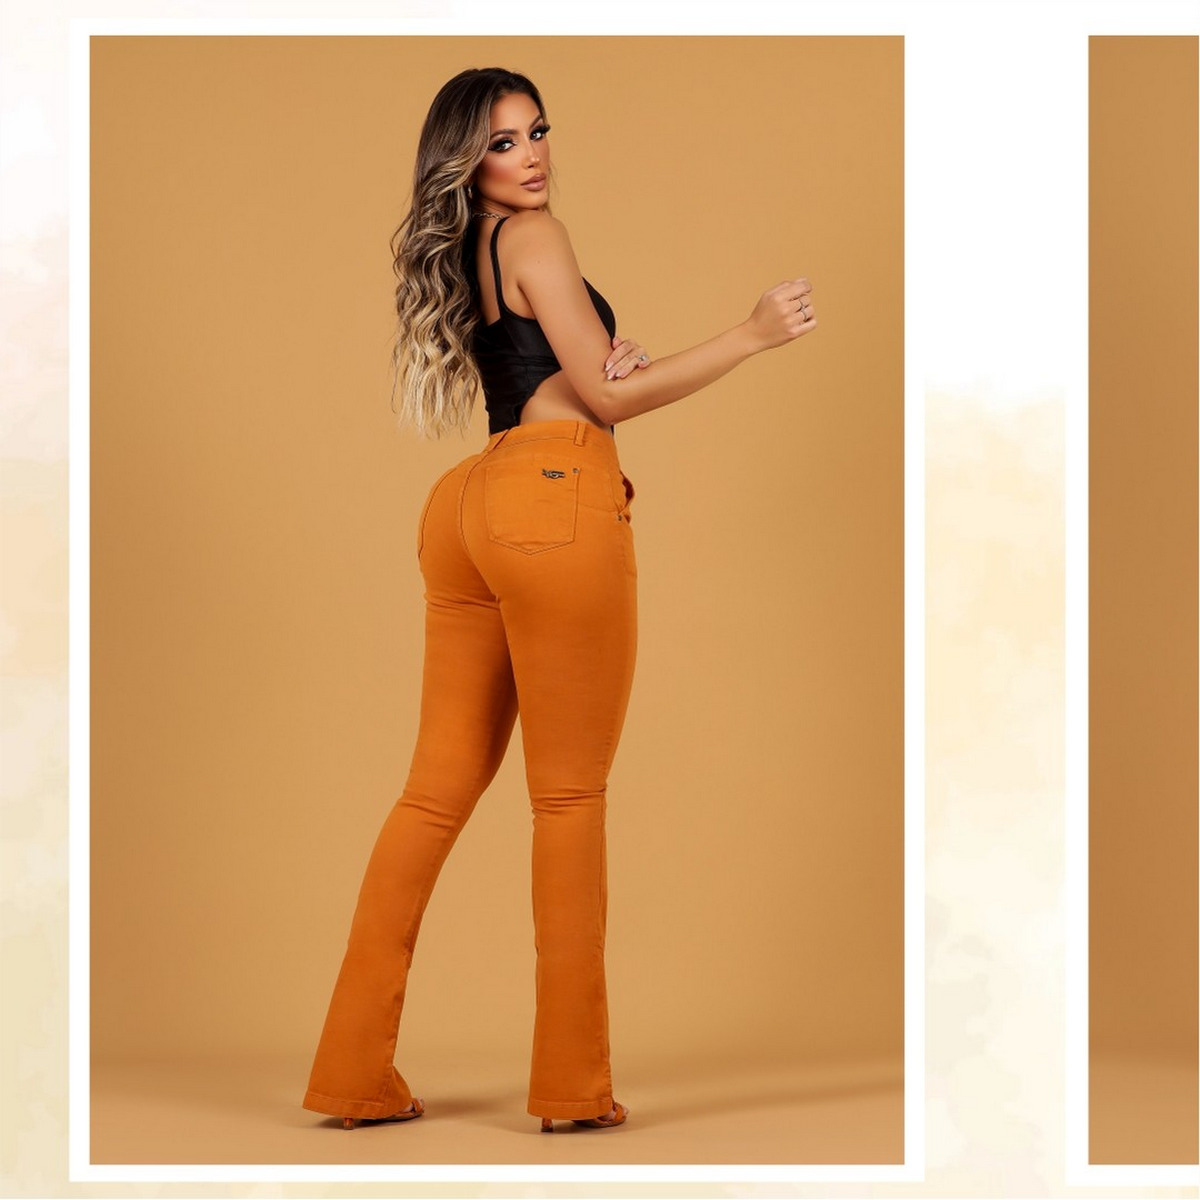 Black Sleeveless Bodysuit, Orange Flare Jeans, and Orange High Heels